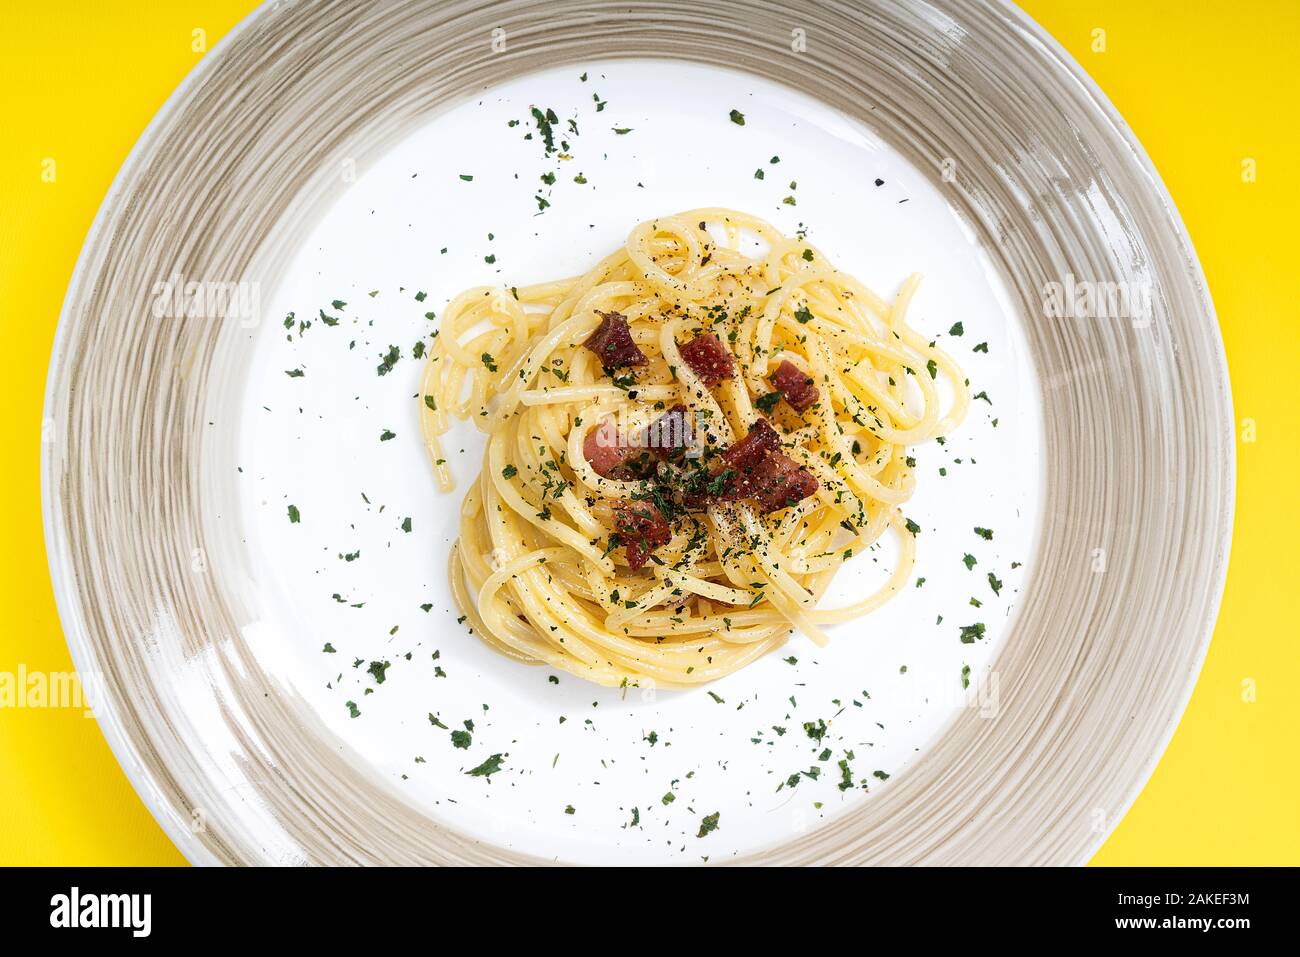 Carbonara spaghetti served on a plate Stock Photo